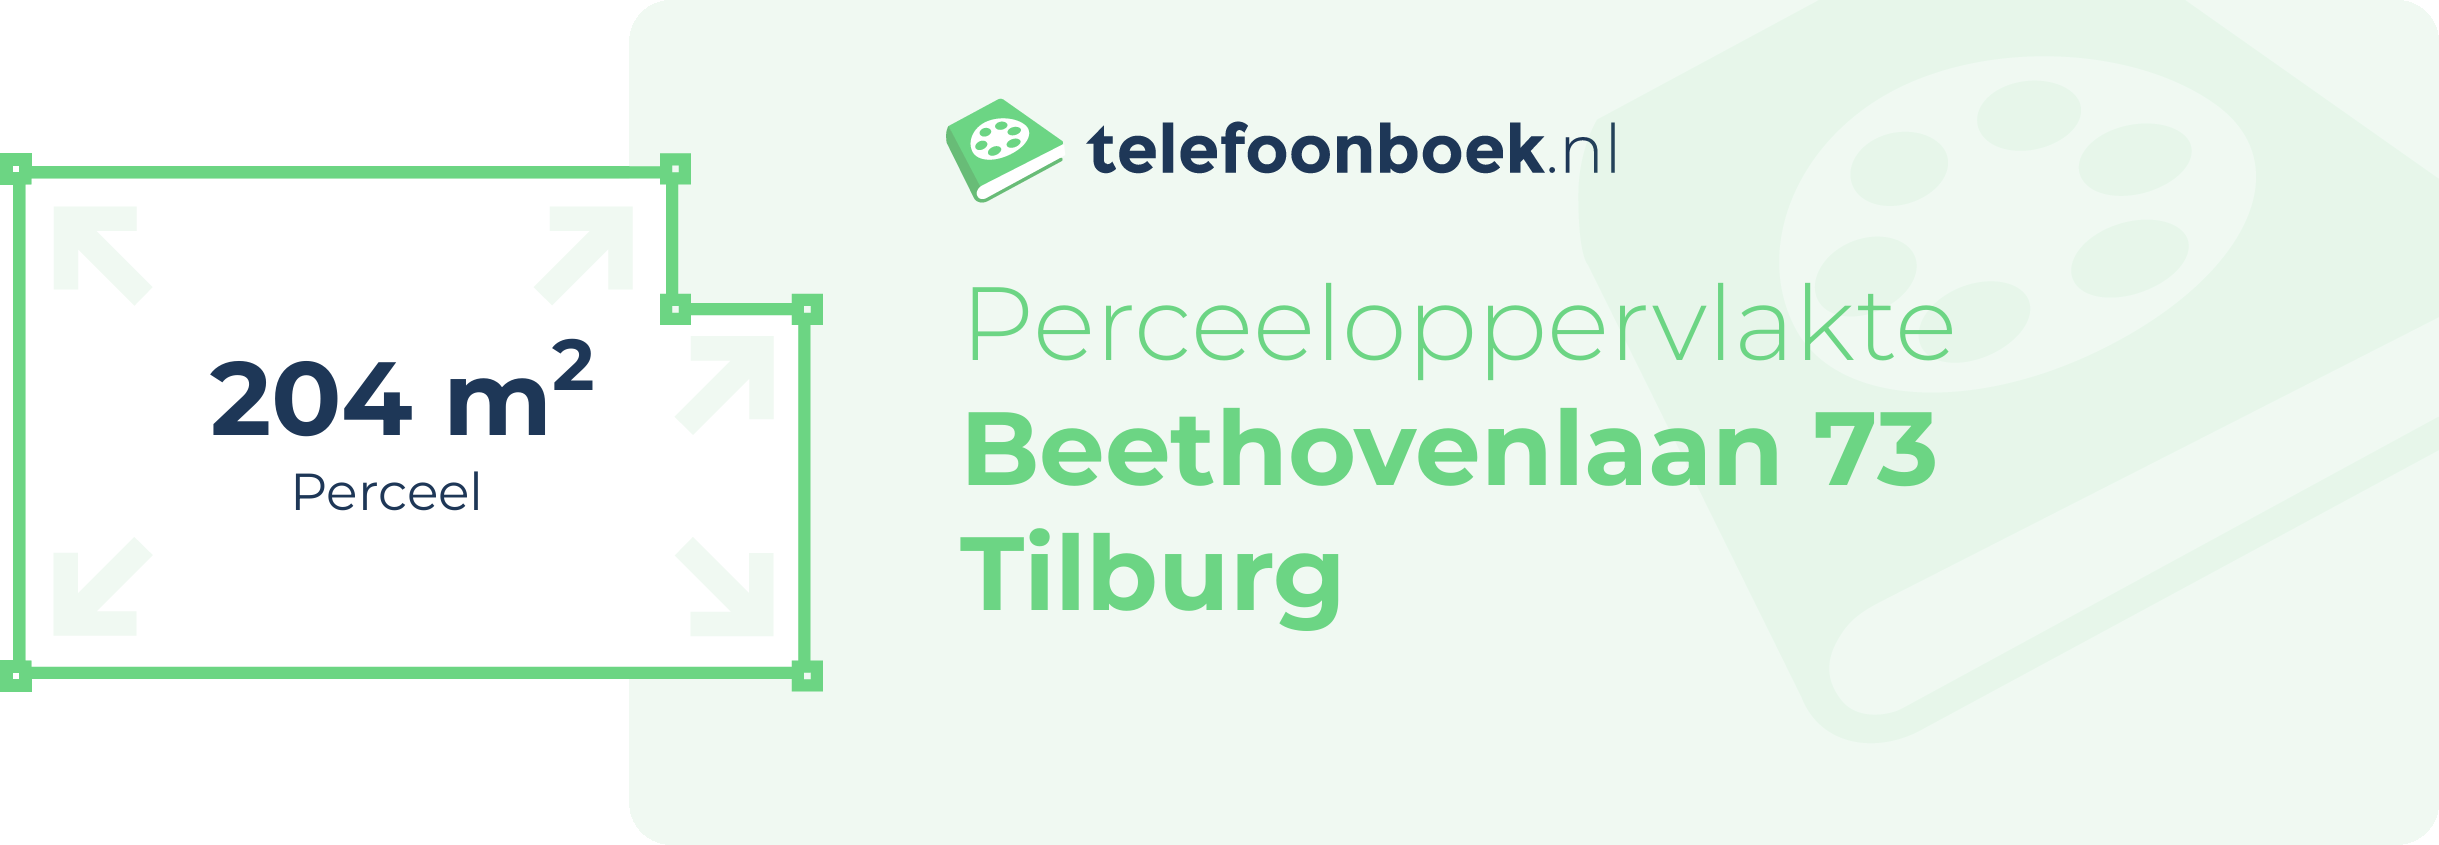 Perceeloppervlakte Beethovenlaan 73 Tilburg